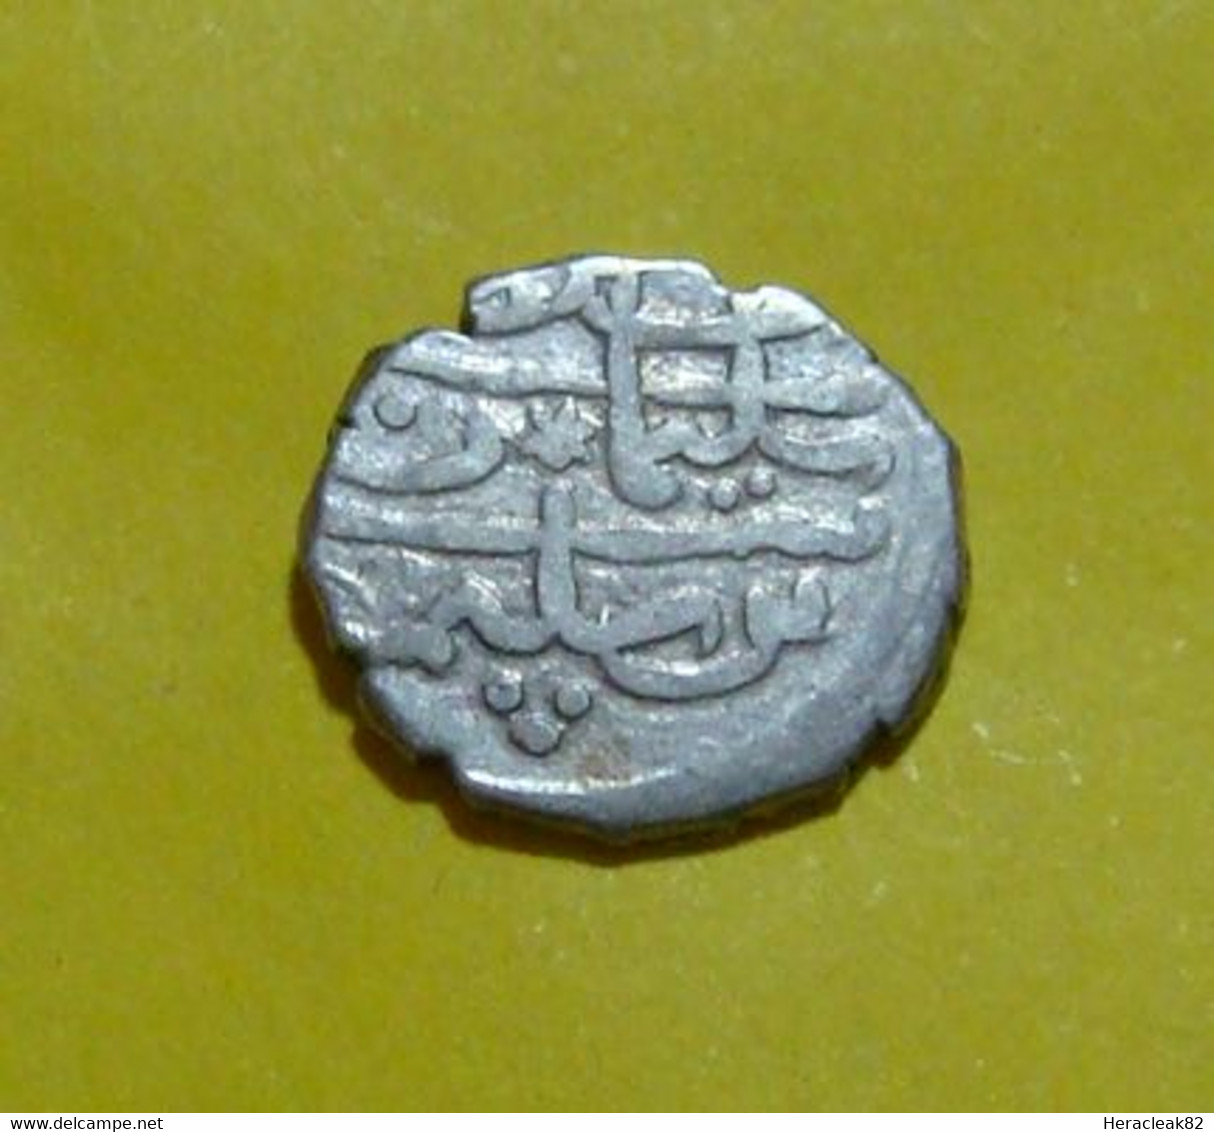 Ottoman Tukey Silver AKCE 926 A.H. (1508) Suleyman I, NOVOBRDO Mint (Kosovo - Serbia) 0.70 gr. High quality